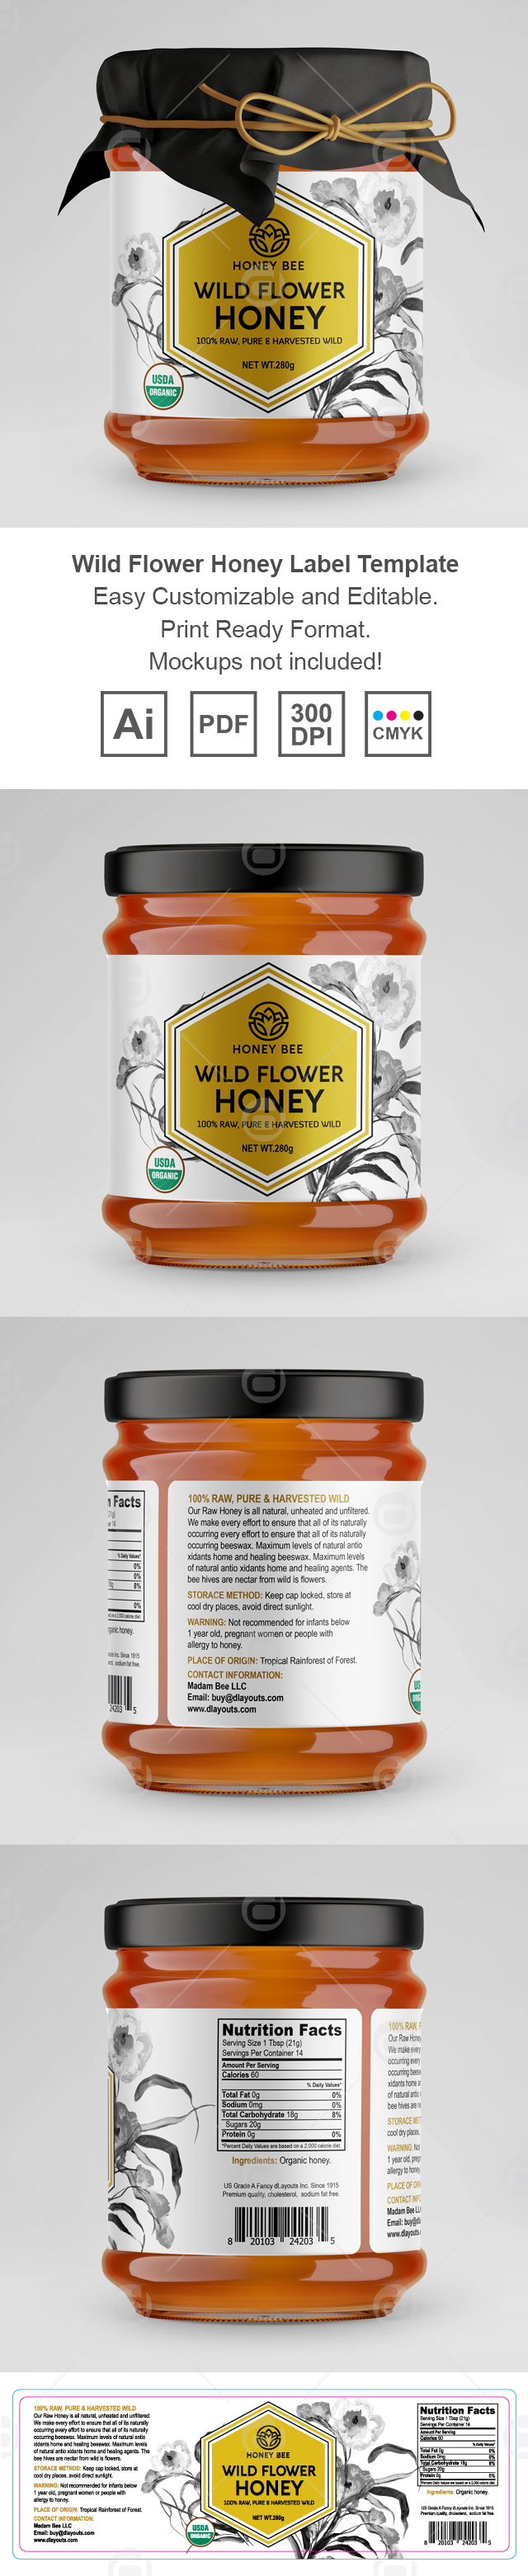 Wild Flower Honey Label Template